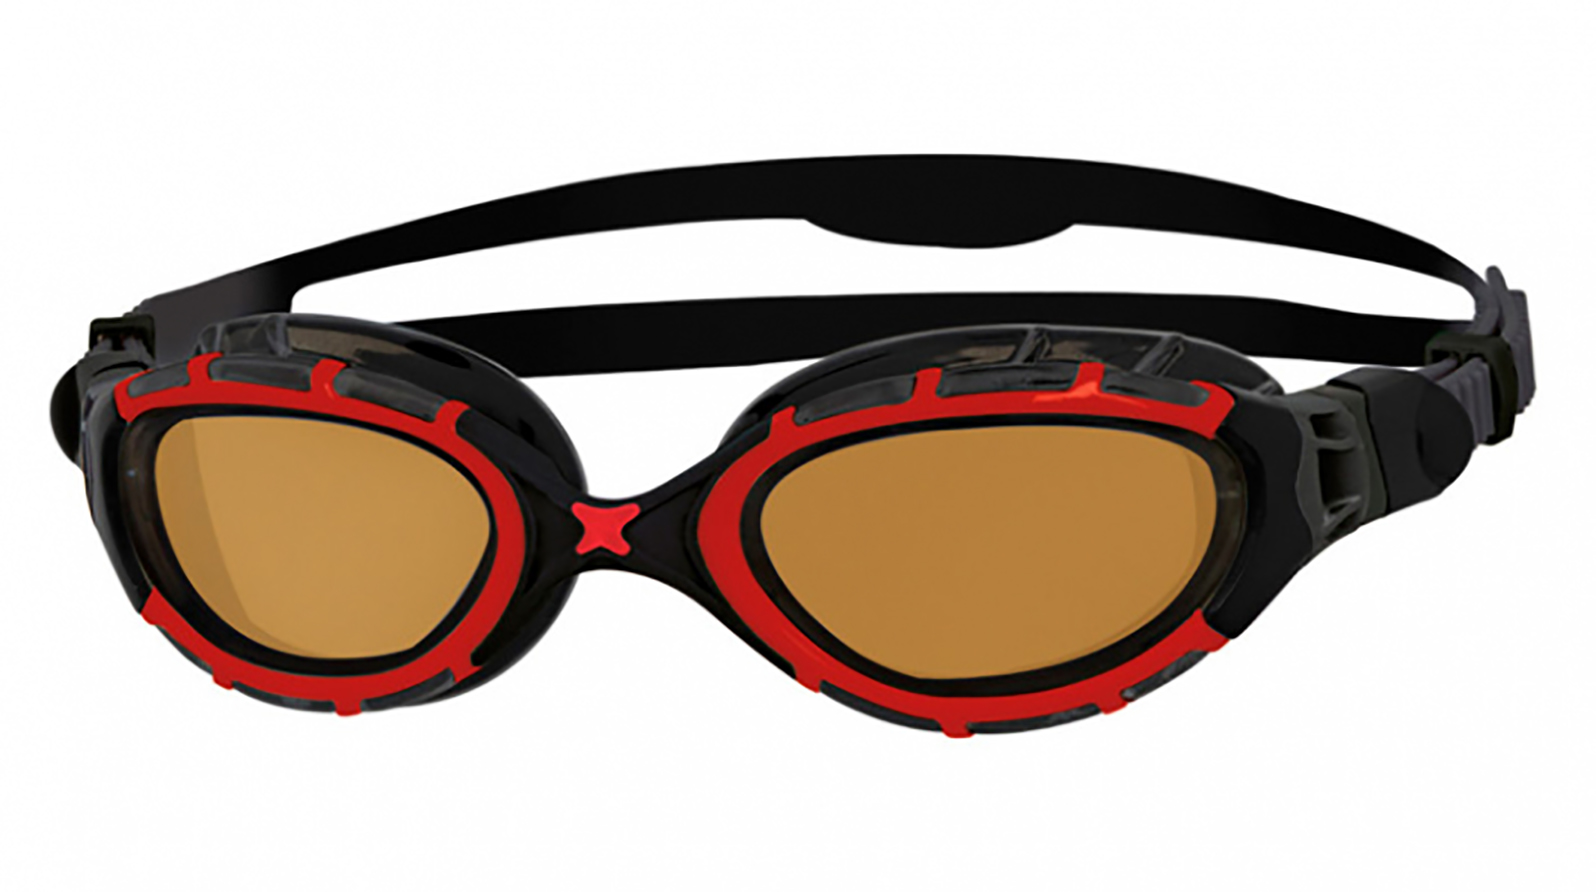 Очки для плавания ZOGGS Predator Flex Polarized Ultra, Copper/Red очки для плавания zoggs predator flex polarized ultra copper red